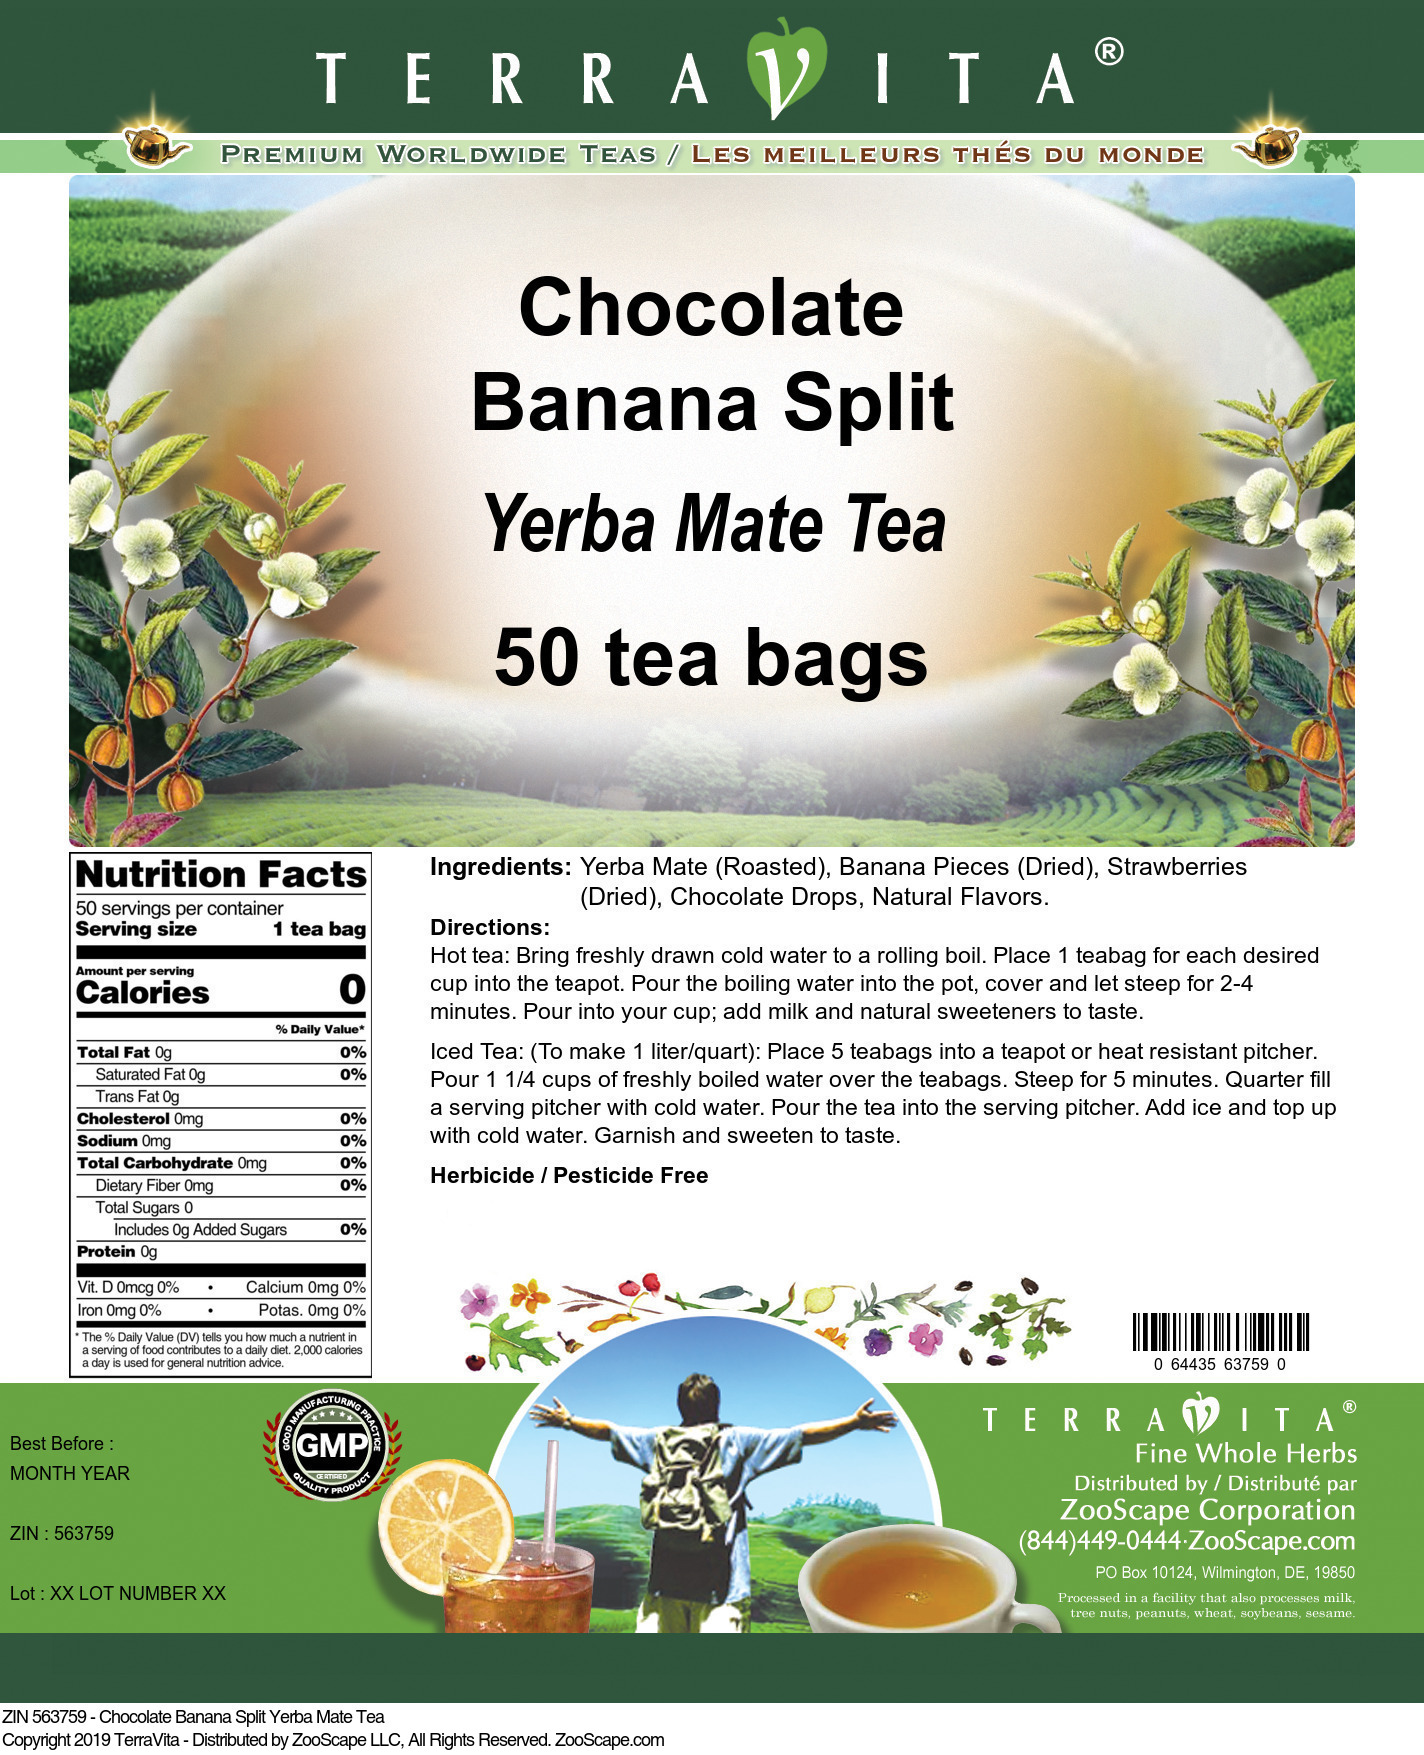 Chocolate Banana Split Yerba Mate Tea - Label